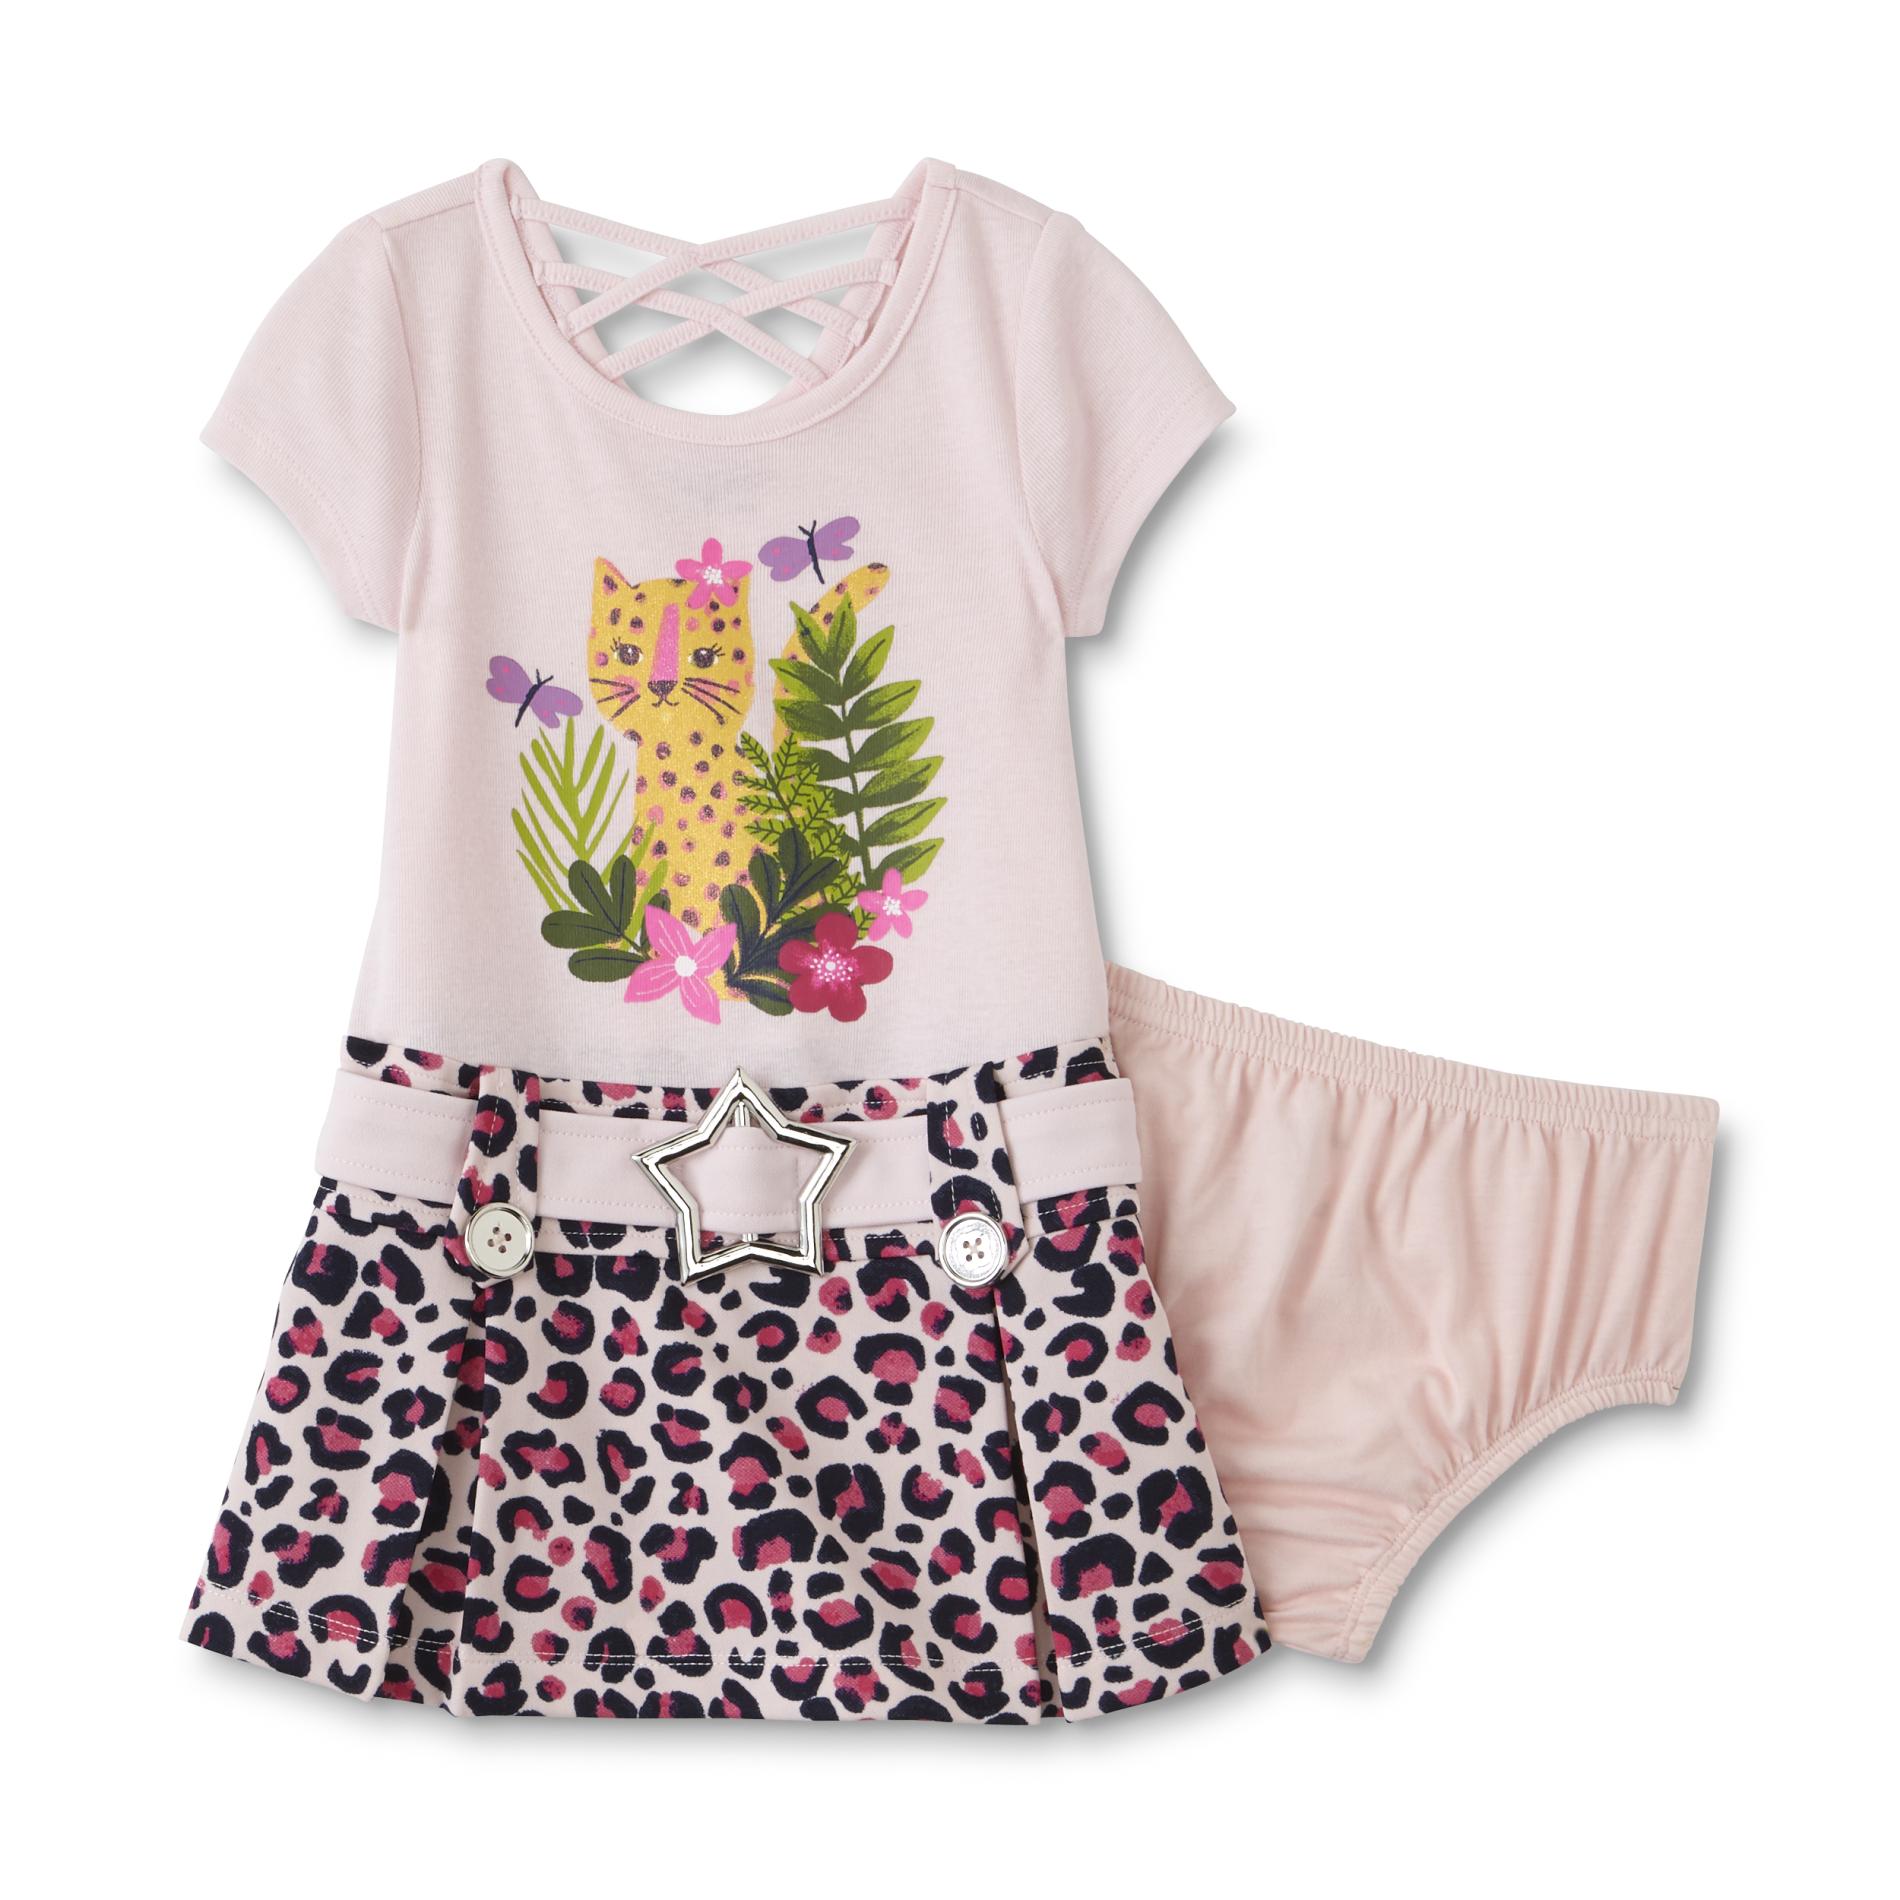 Toughskins Infant & Toddler Girls' Dress & Diaper Cover - Leopard